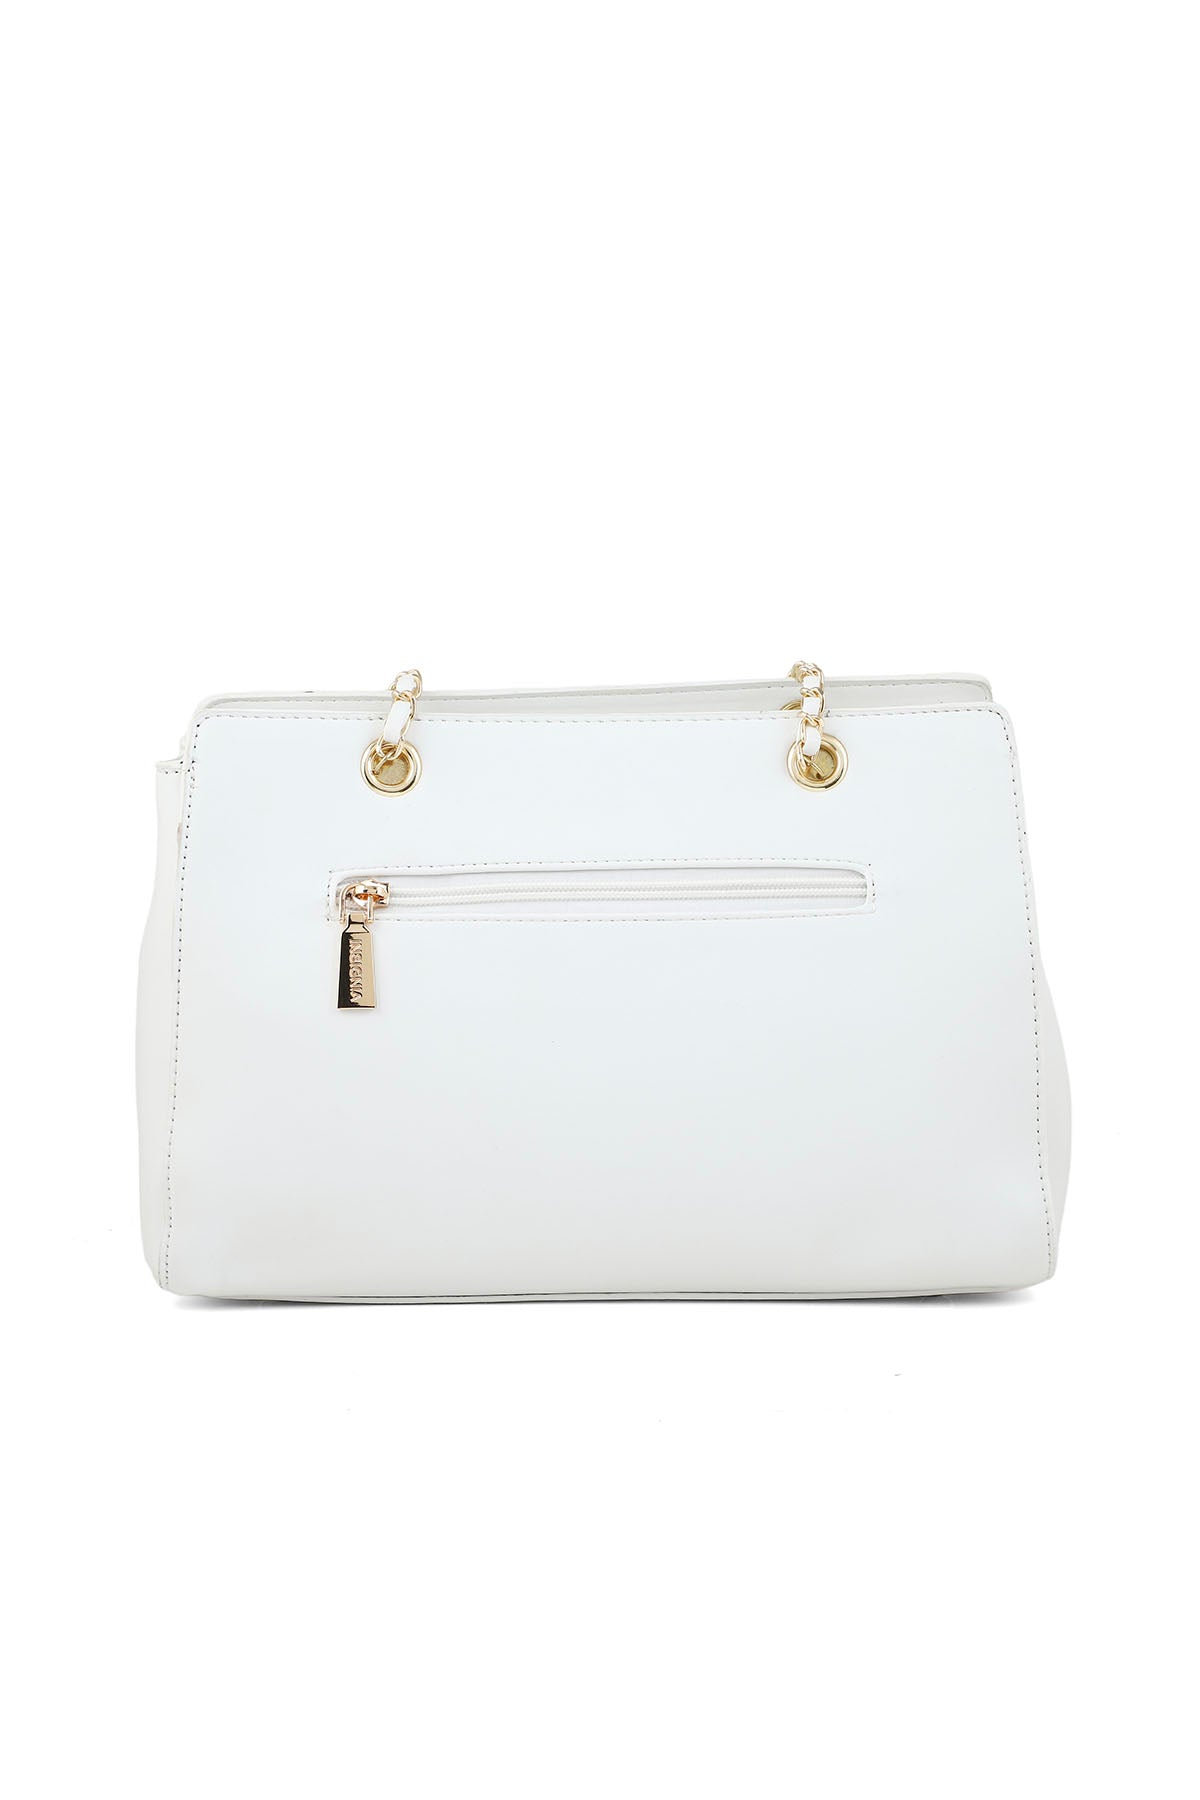 Baguette Shoulder Bags B15038-White